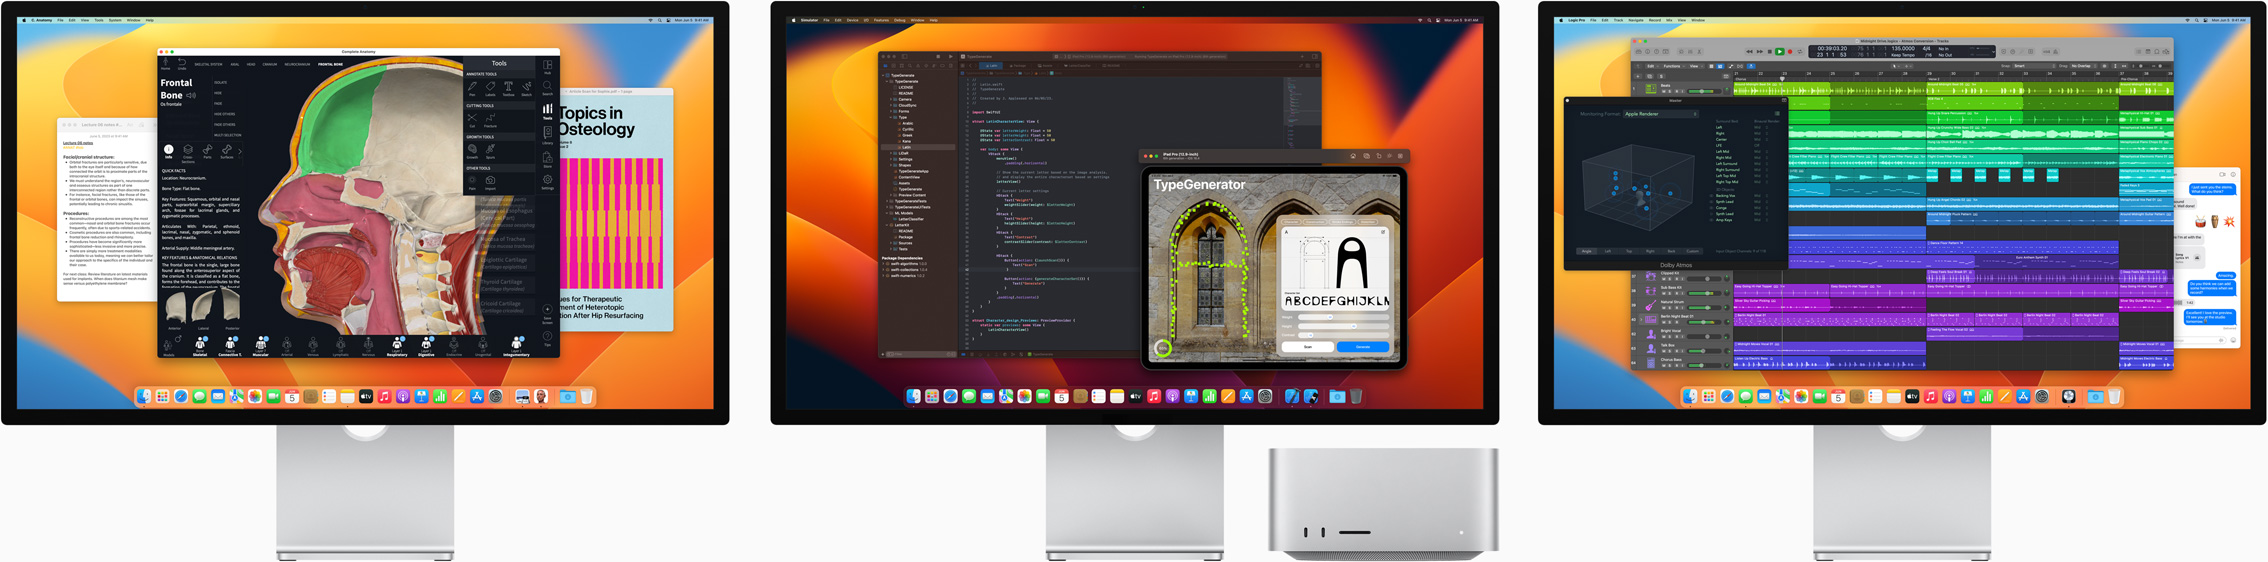 Mac Studio και τρεις οθόνες Studio Display, τα οποία παρουσιάζουν διαφορετικά apps στην οθόνη